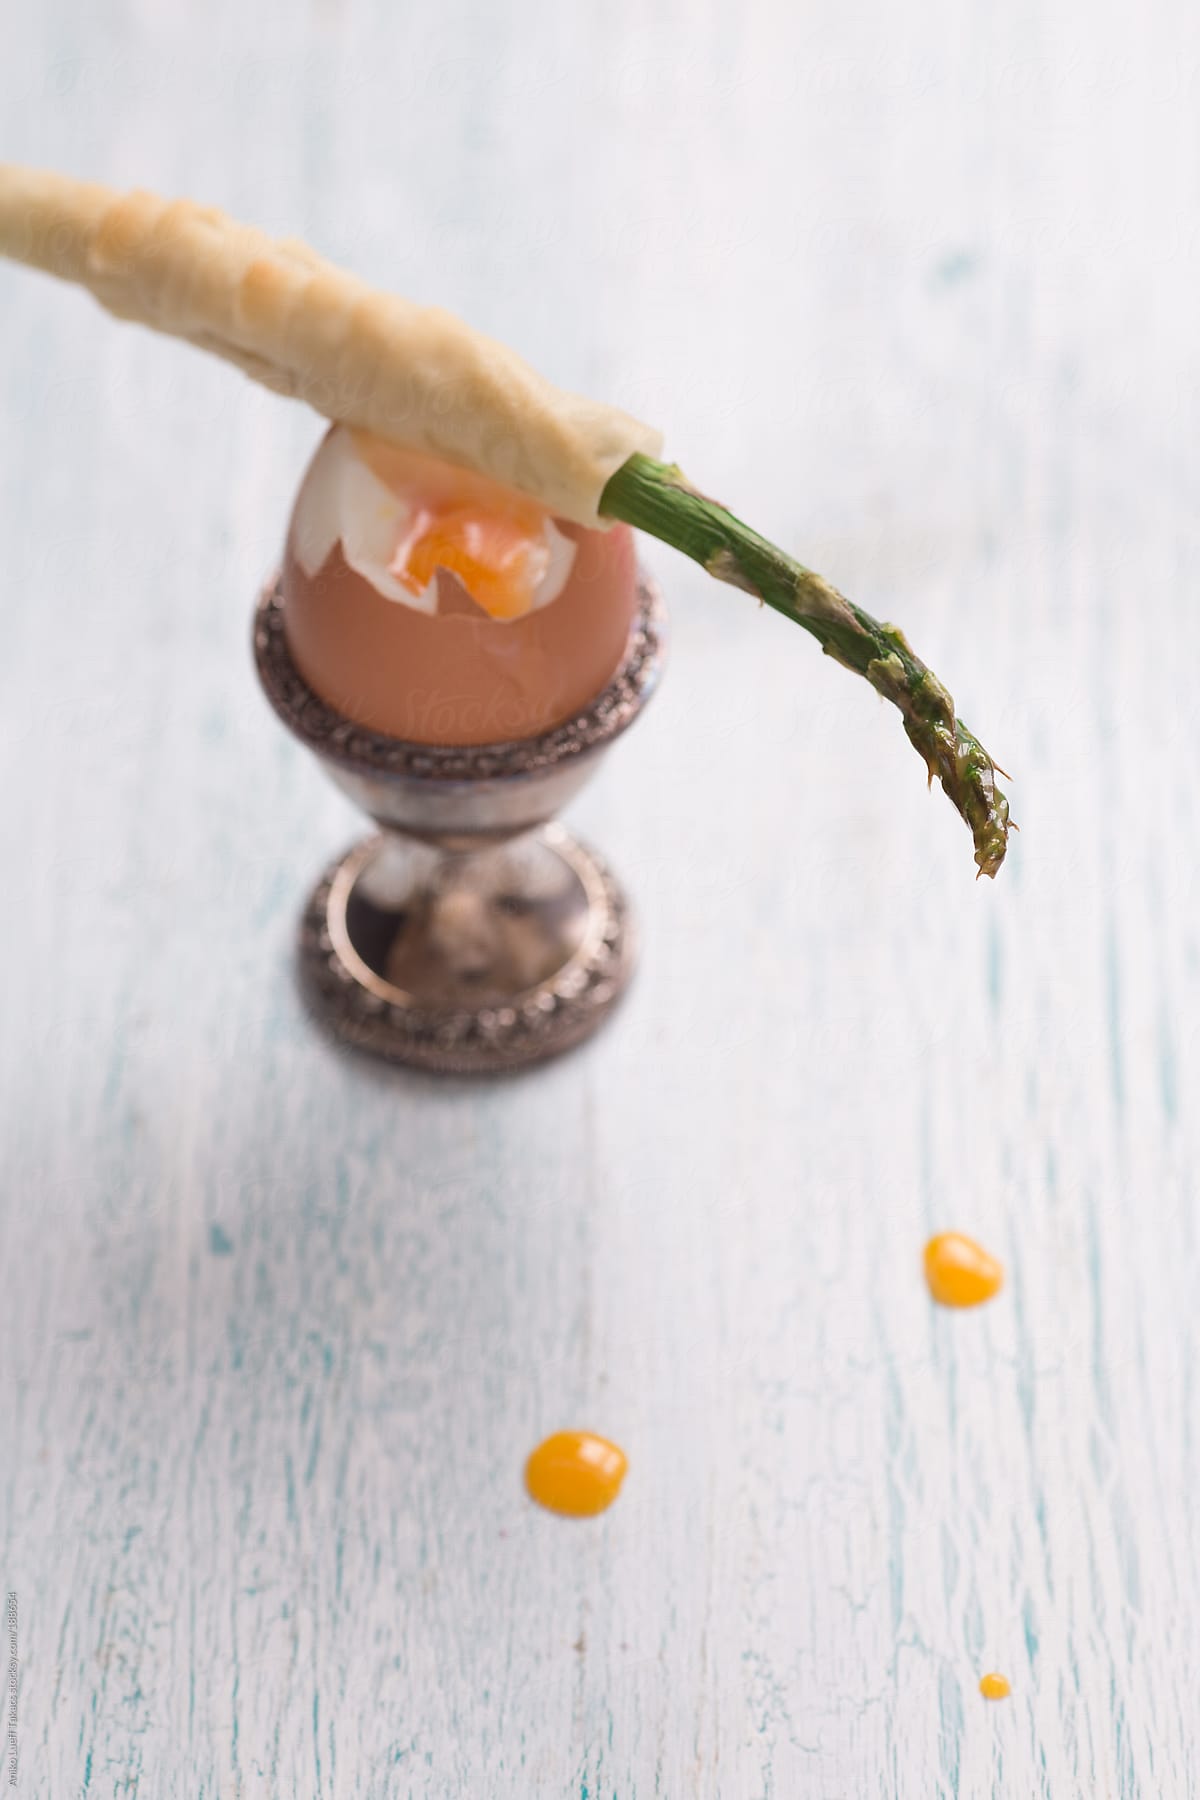 Green asparagus cigar and a soft boiled egg